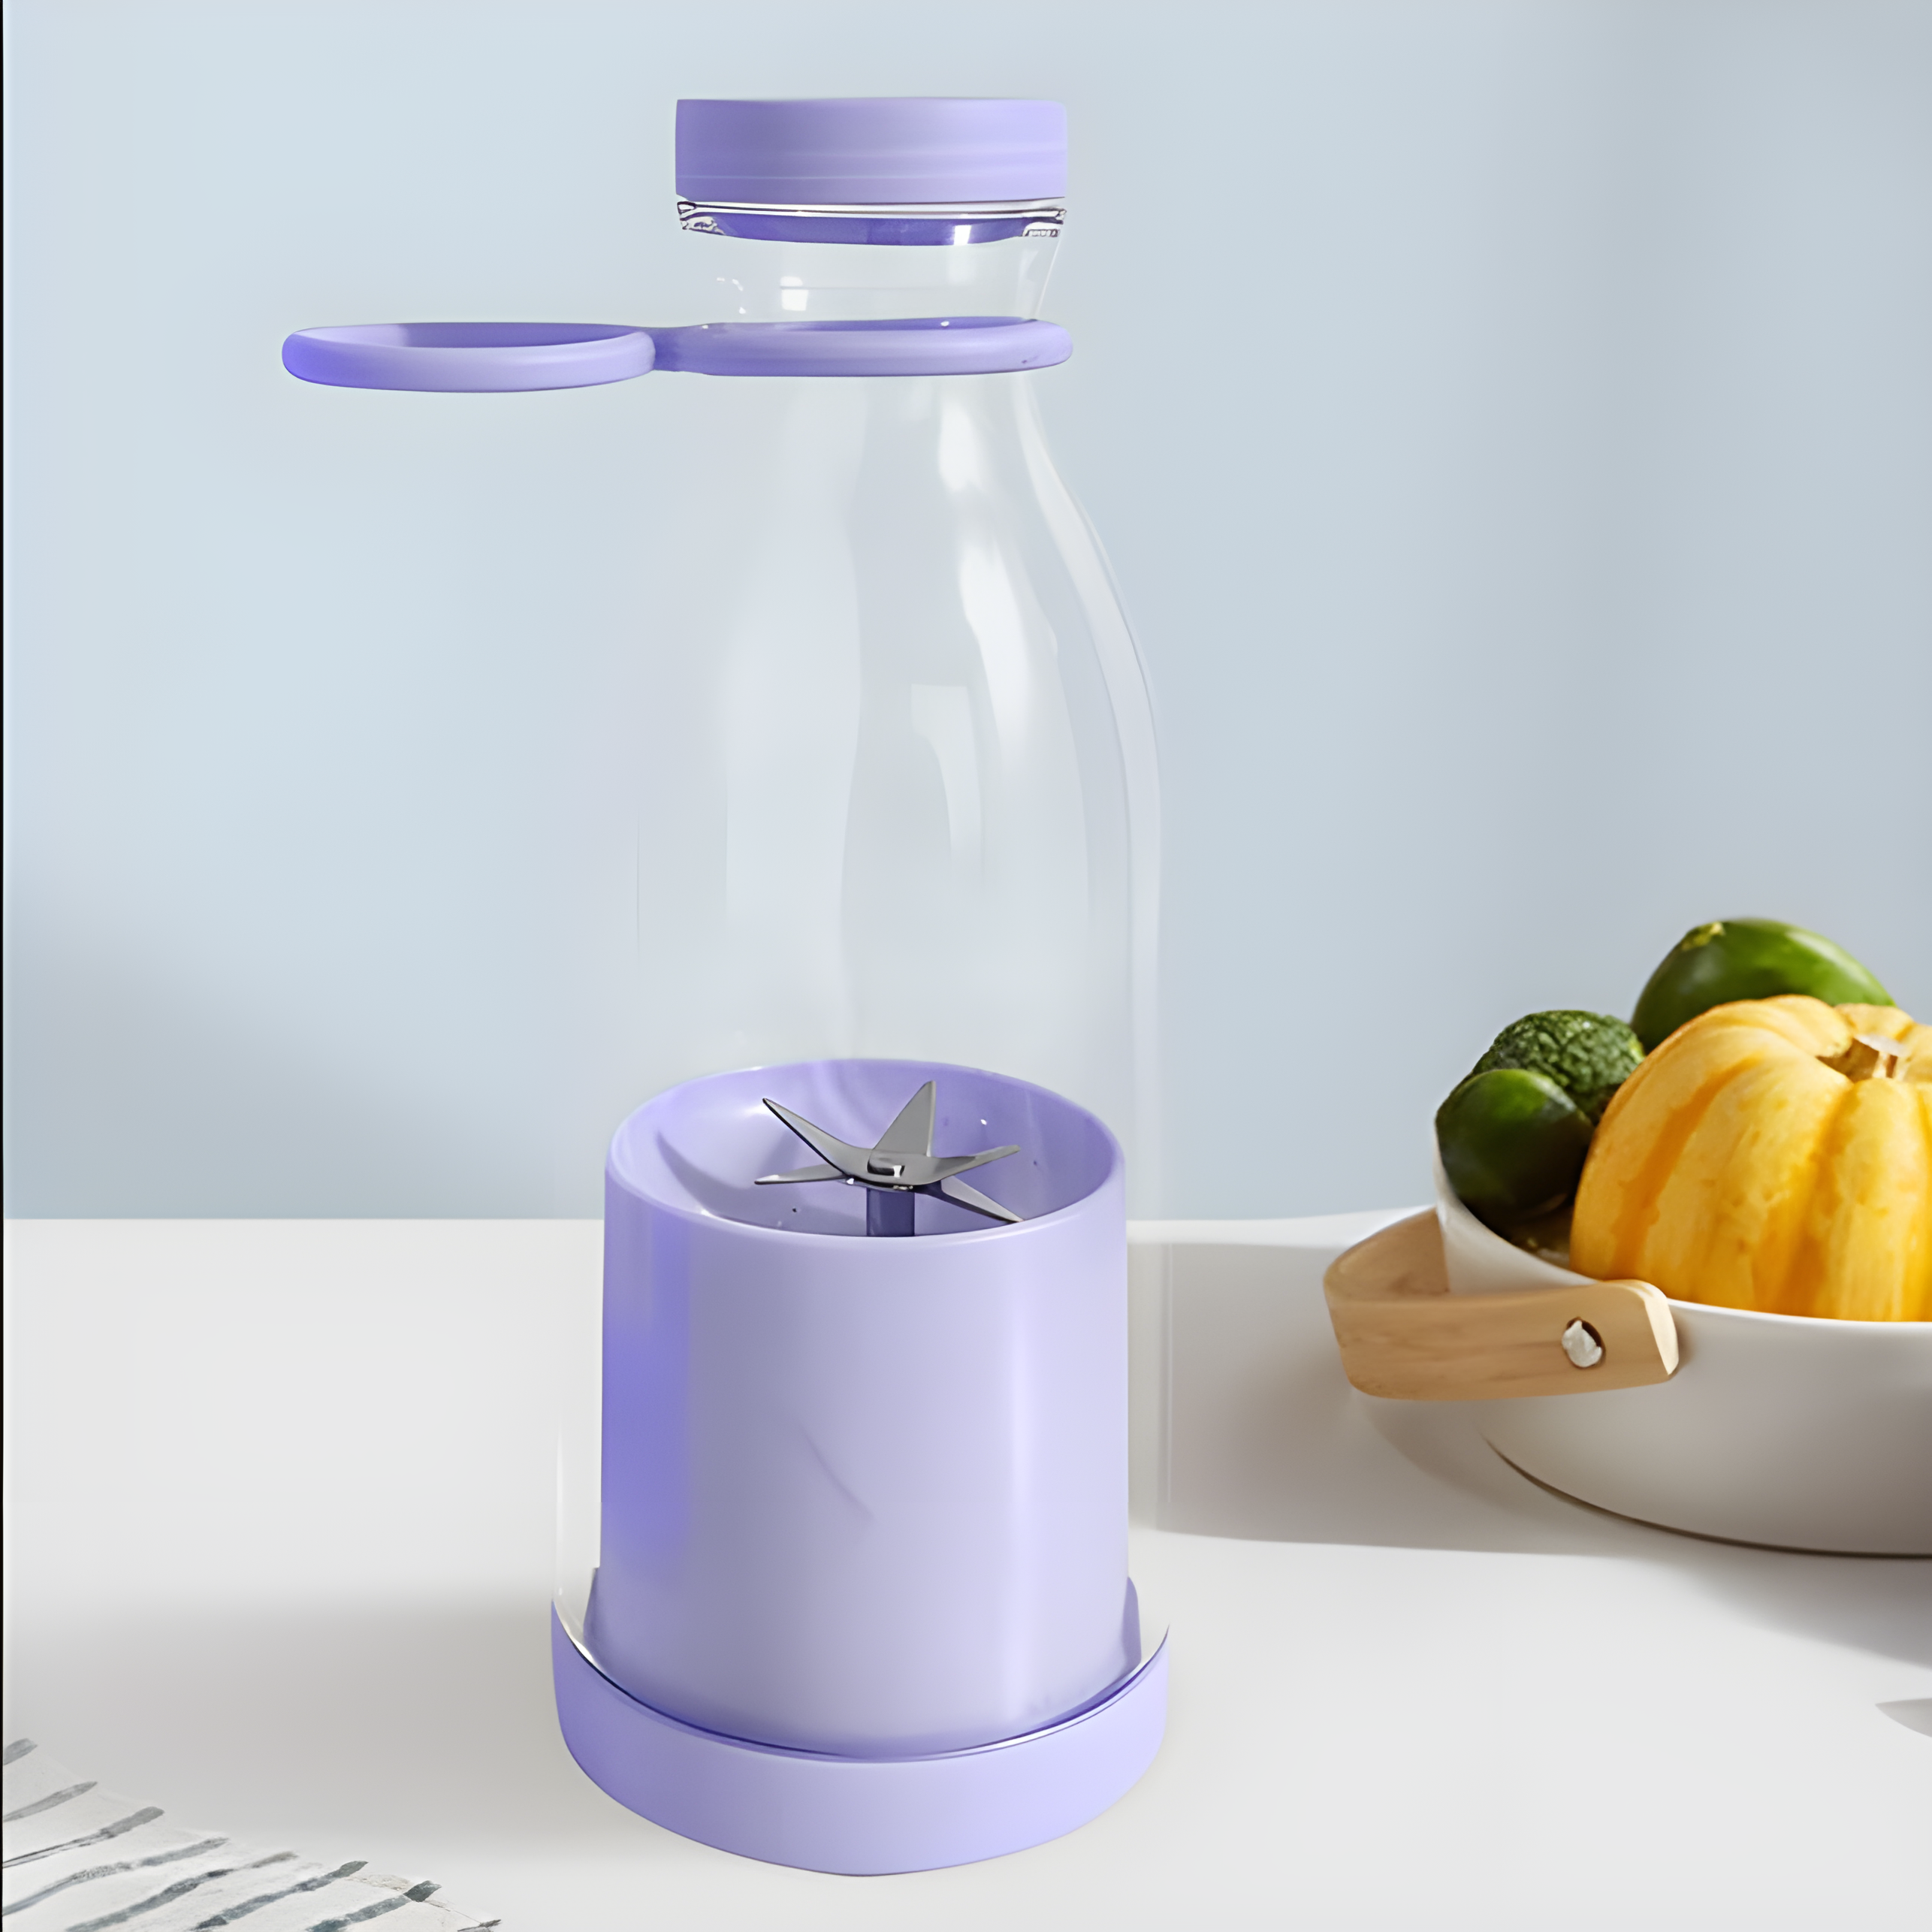 Mini Portable and Rechargeable Juice Maker, Blender Mixer USB Rechargeable Mini Fruit Juicer Blender - Purple image